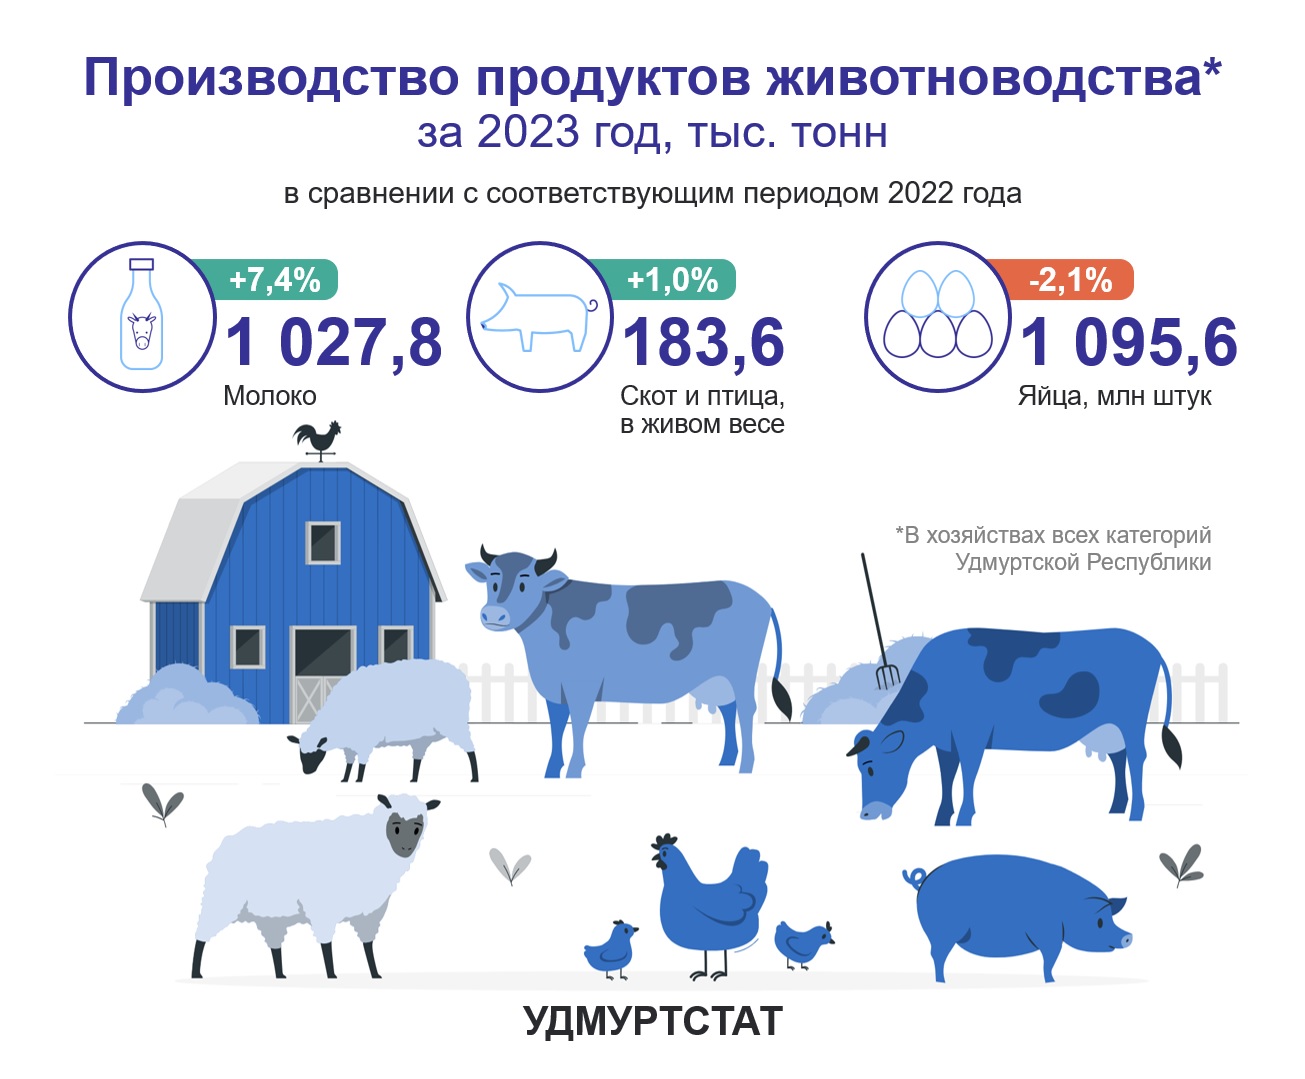 Производство продуктов животноводства за 2023 год.